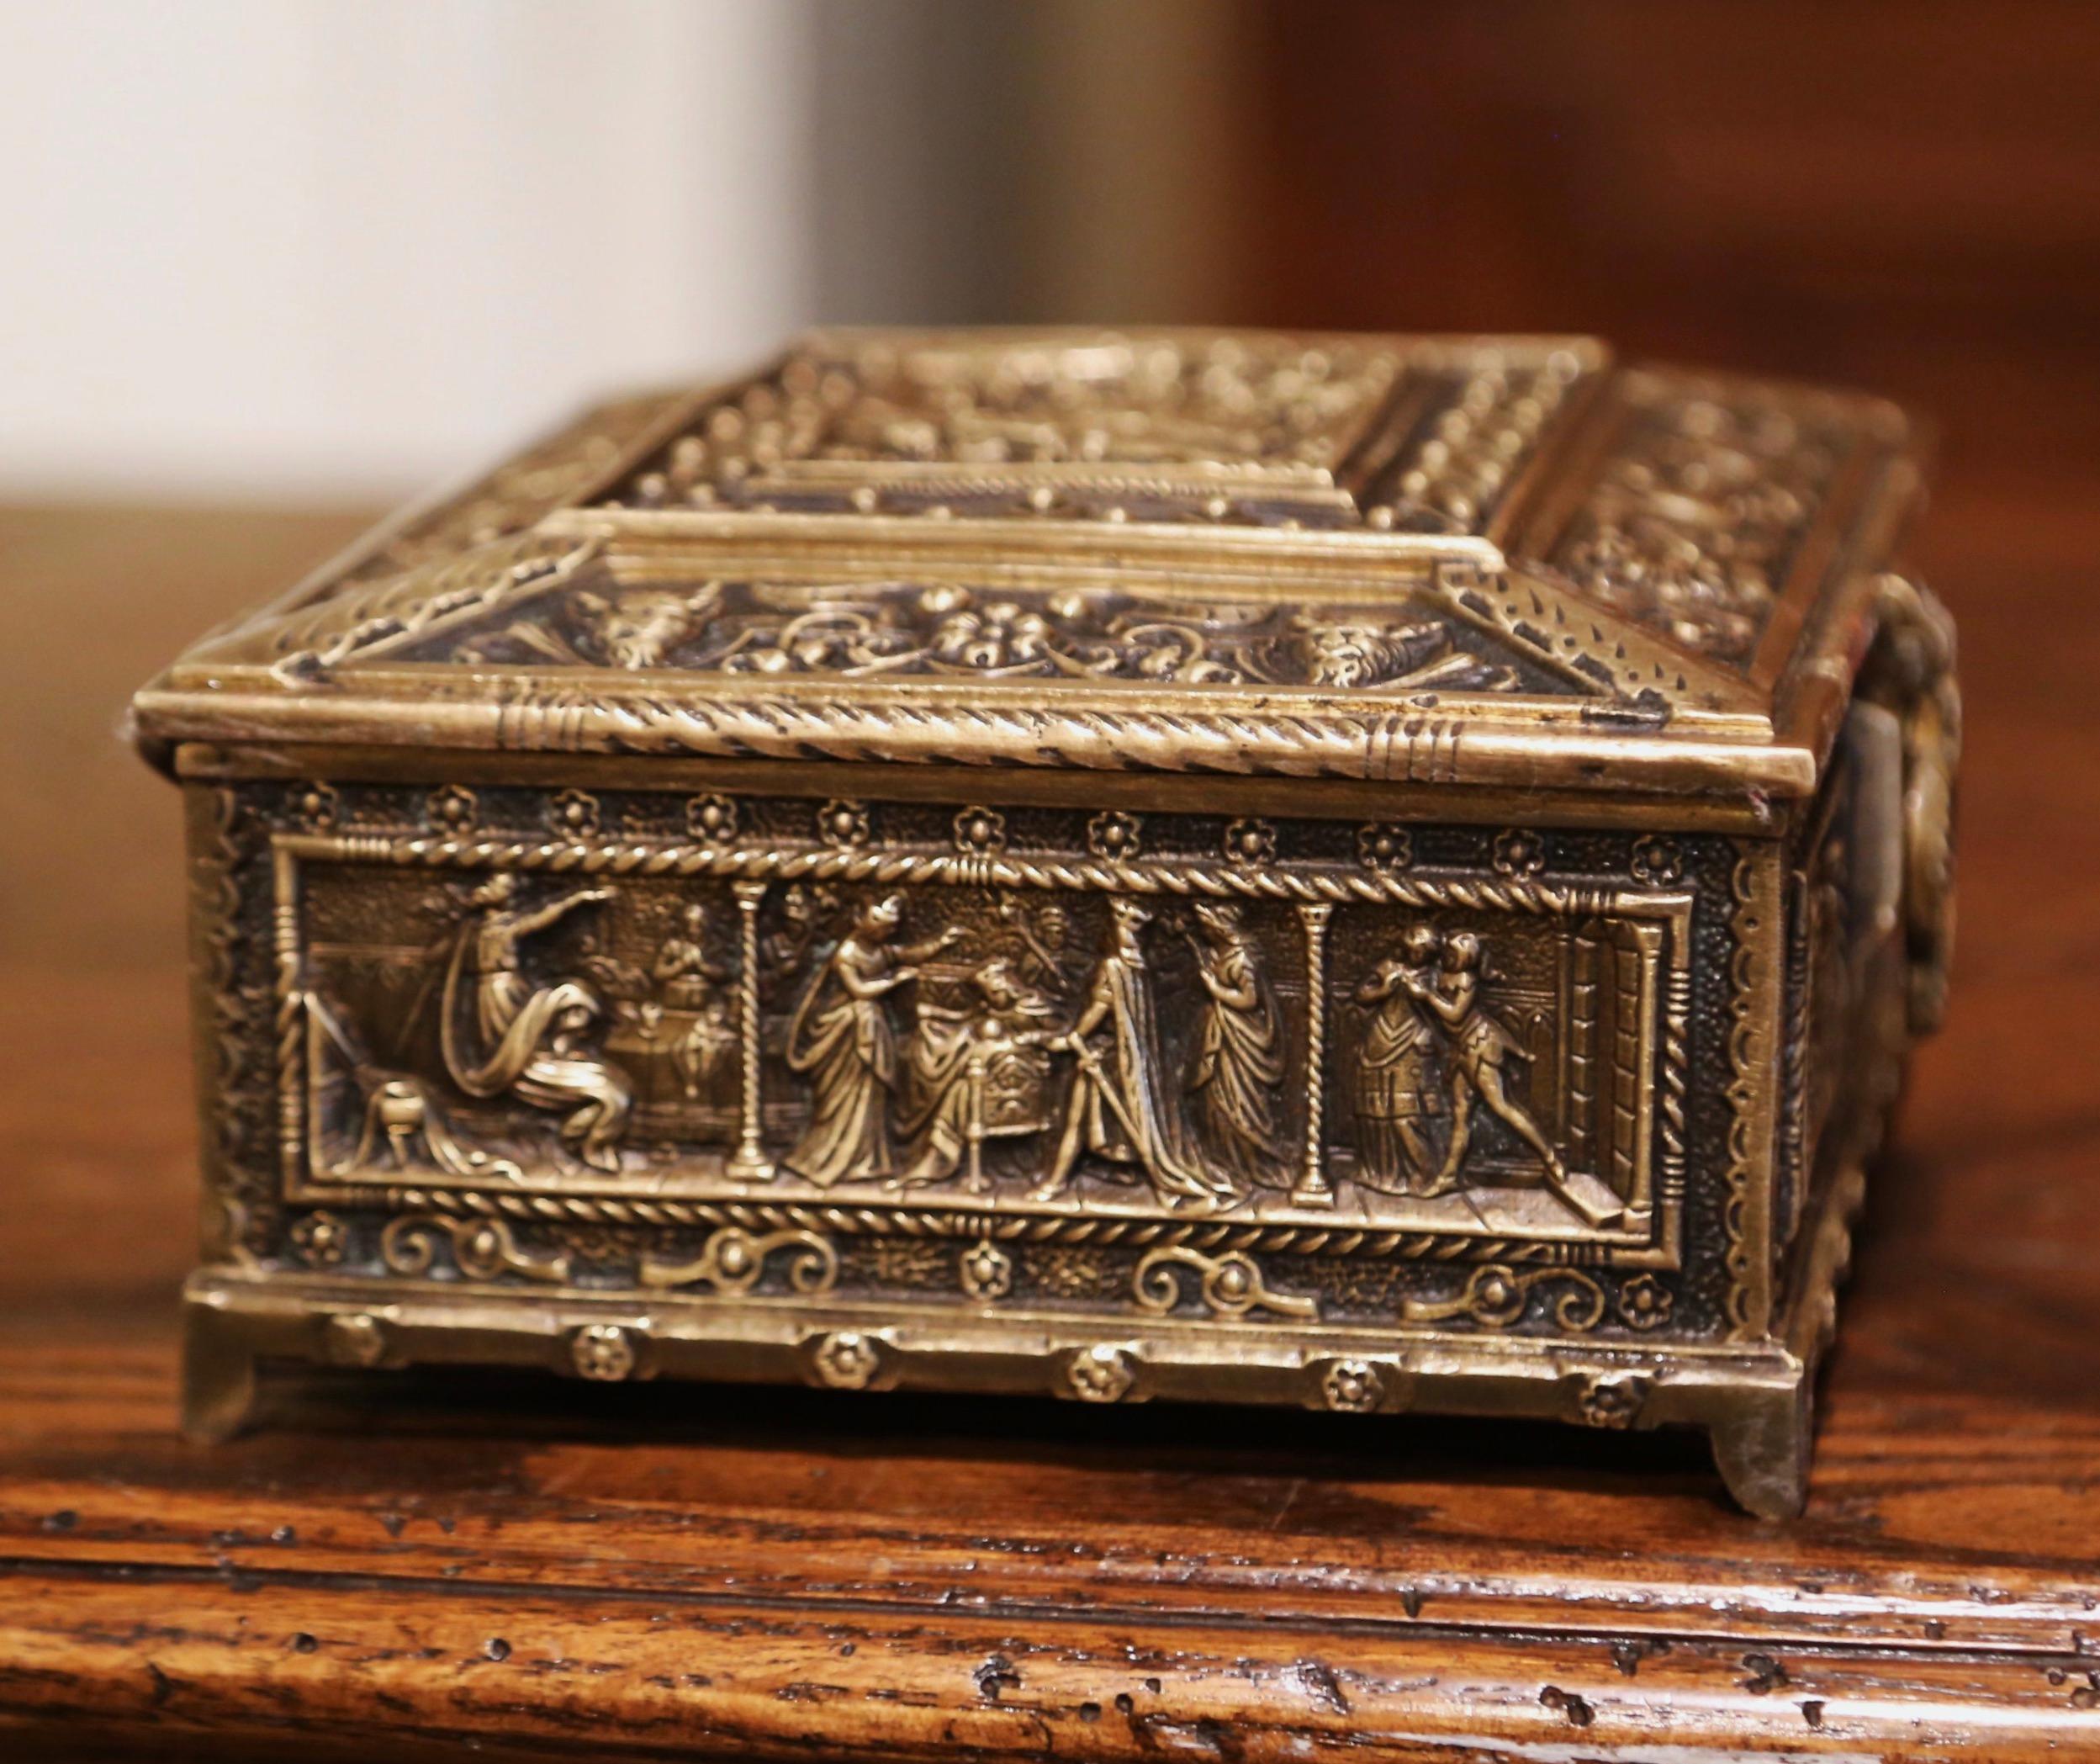 19th Century French Patinated Bronze Jewelry Box with Mythology Decor 2